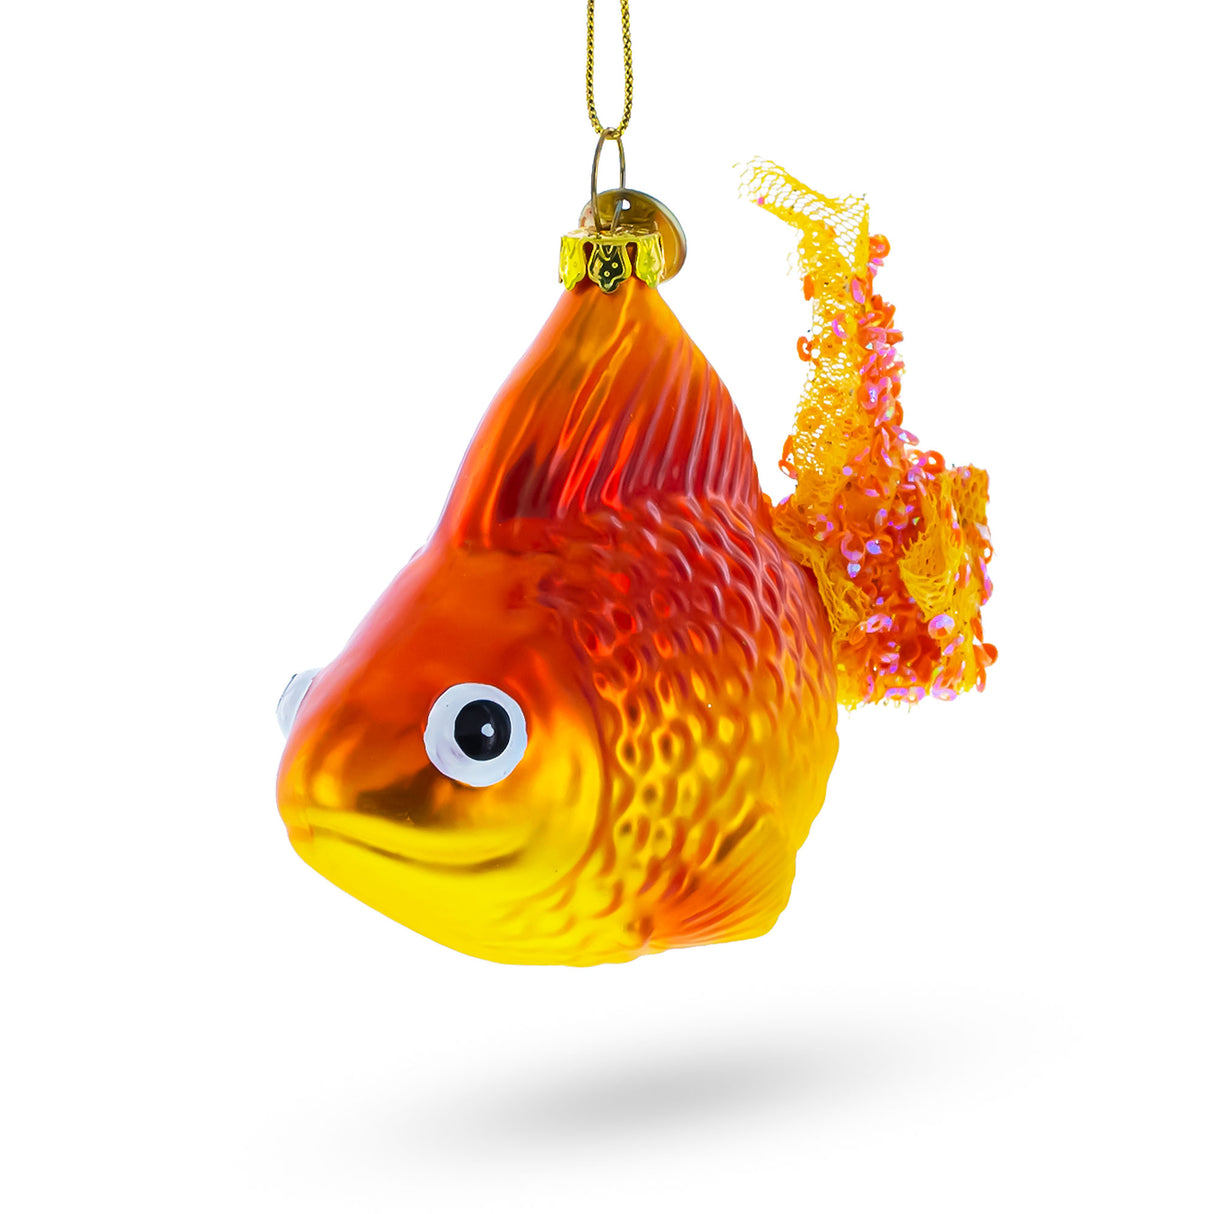 Glass Glistening Goldfish in Aquatic Splendor - Blown Glass Christmas Ornament in Orange color